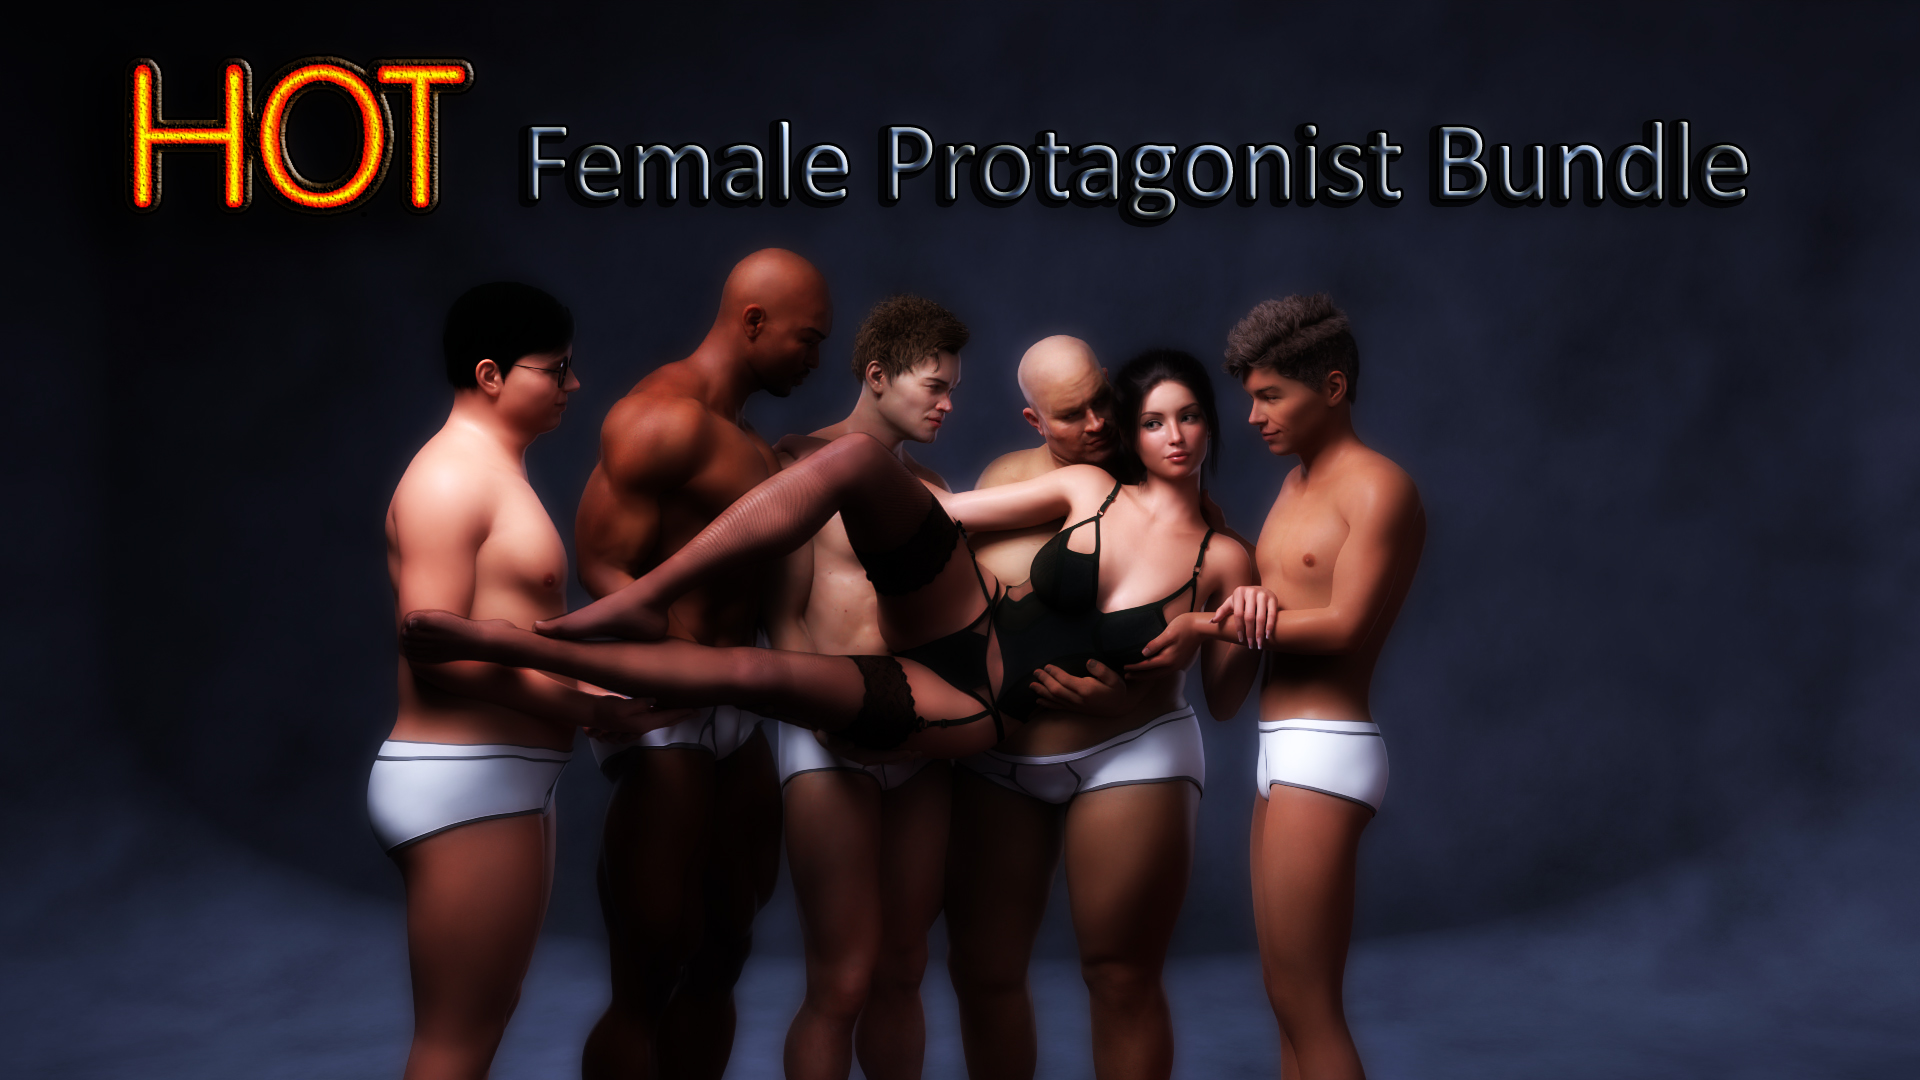 Adult games female protagonist